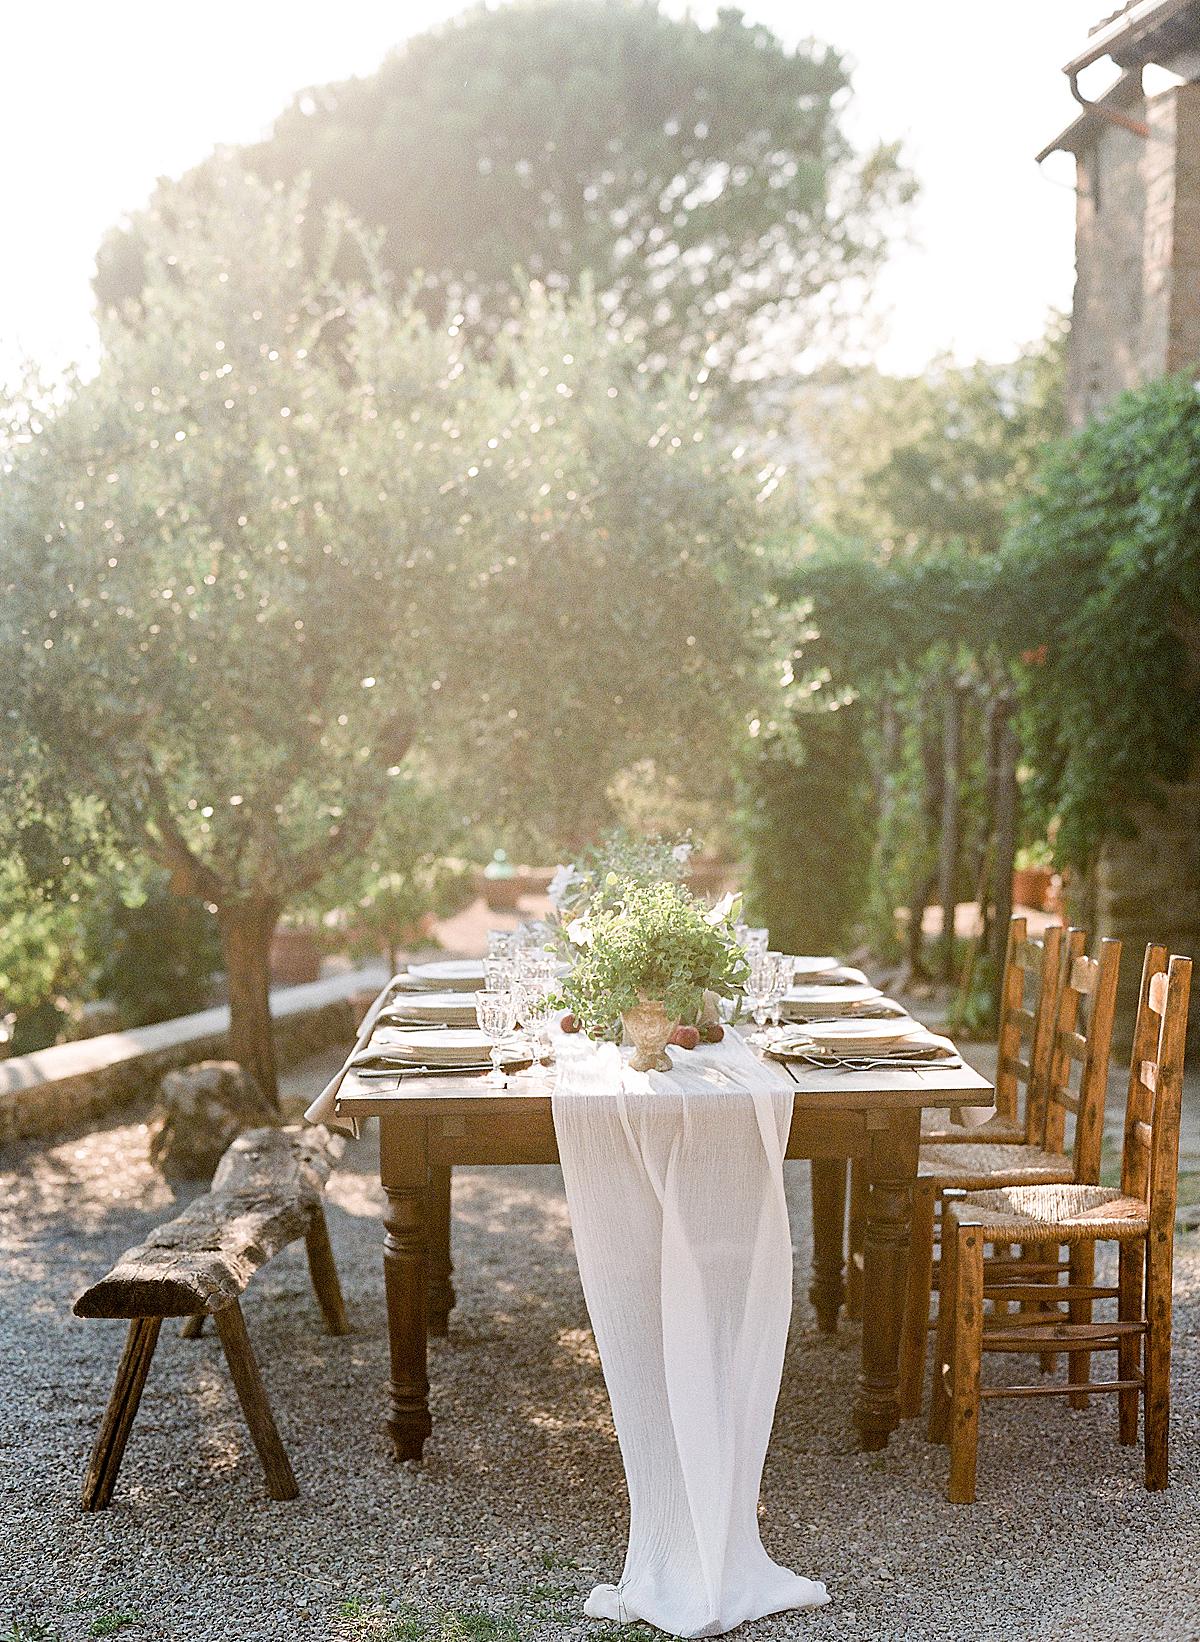 table set up at villa montanare in tuscany wedding venue